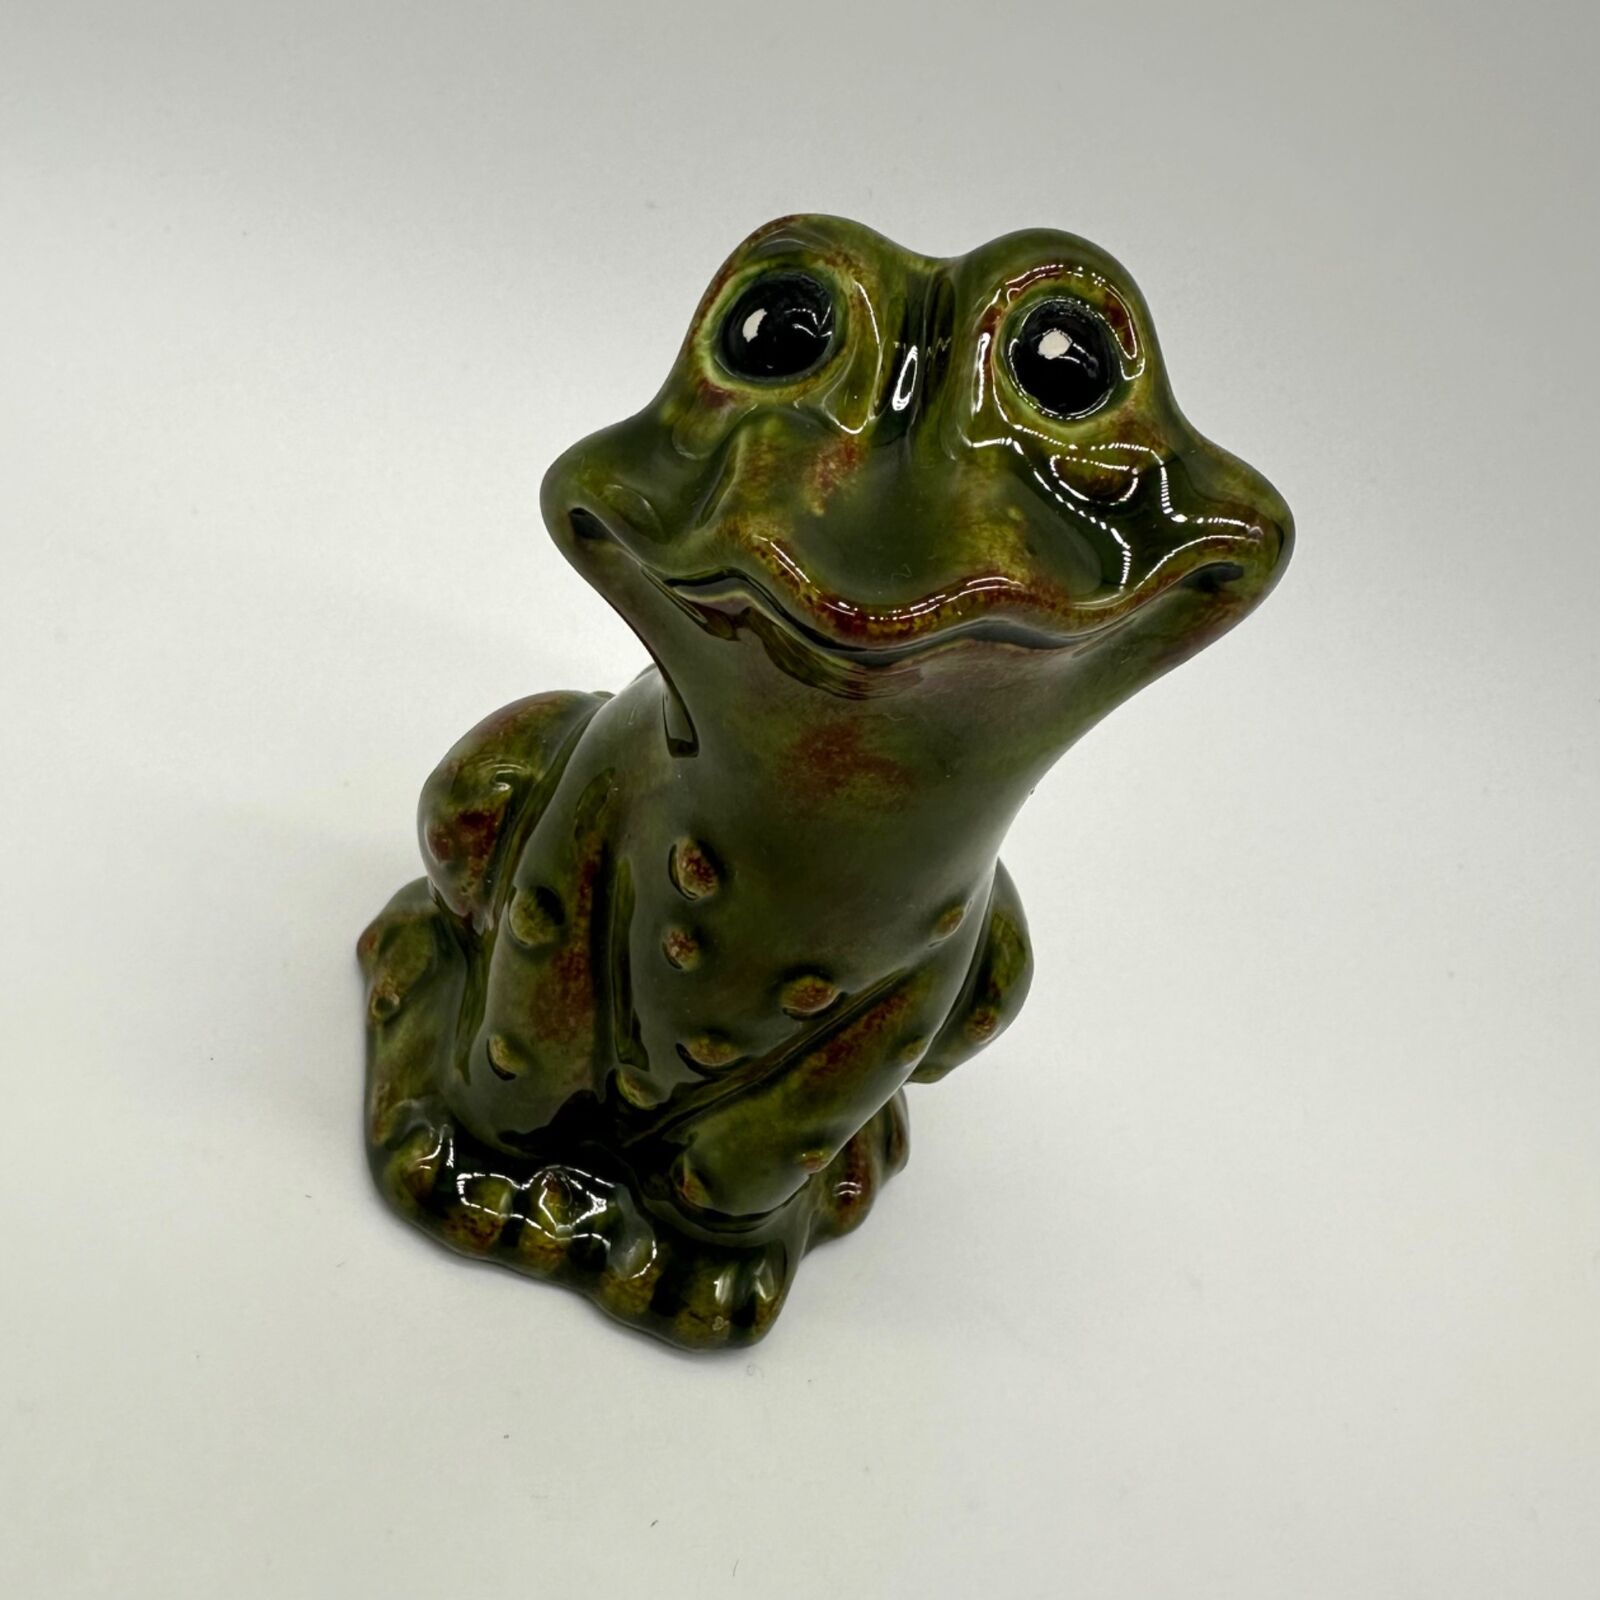 Vintage Frog Figurine Smiling Green Kitschy Ceramic Woodland Creature 1970s